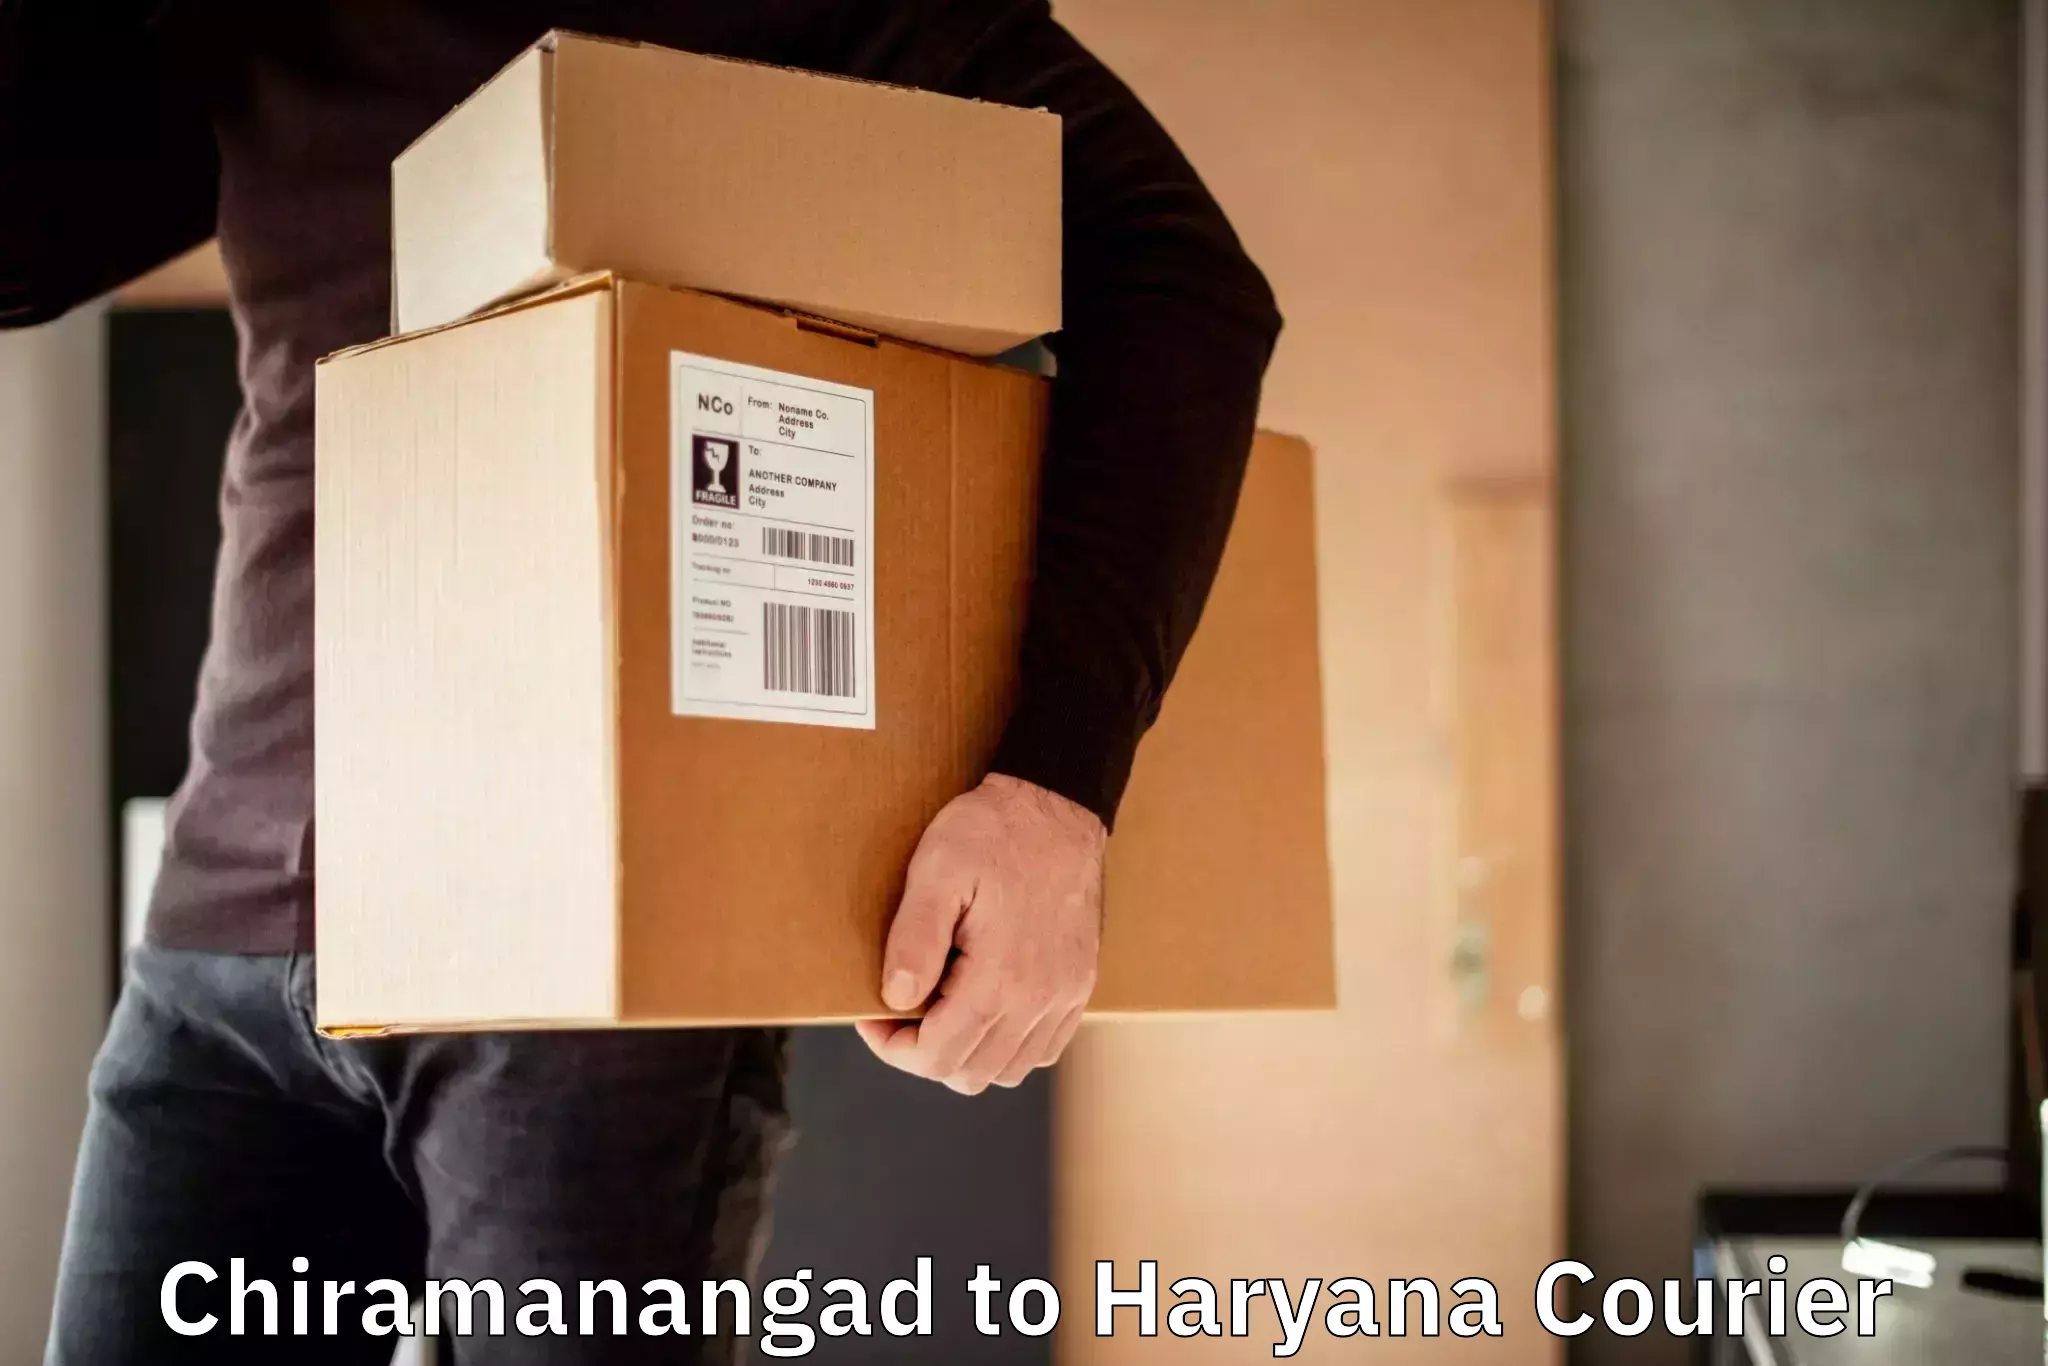 Reliable delivery network Chiramanangad to Chaudhary Charan Singh Haryana Agricultural University Hisar